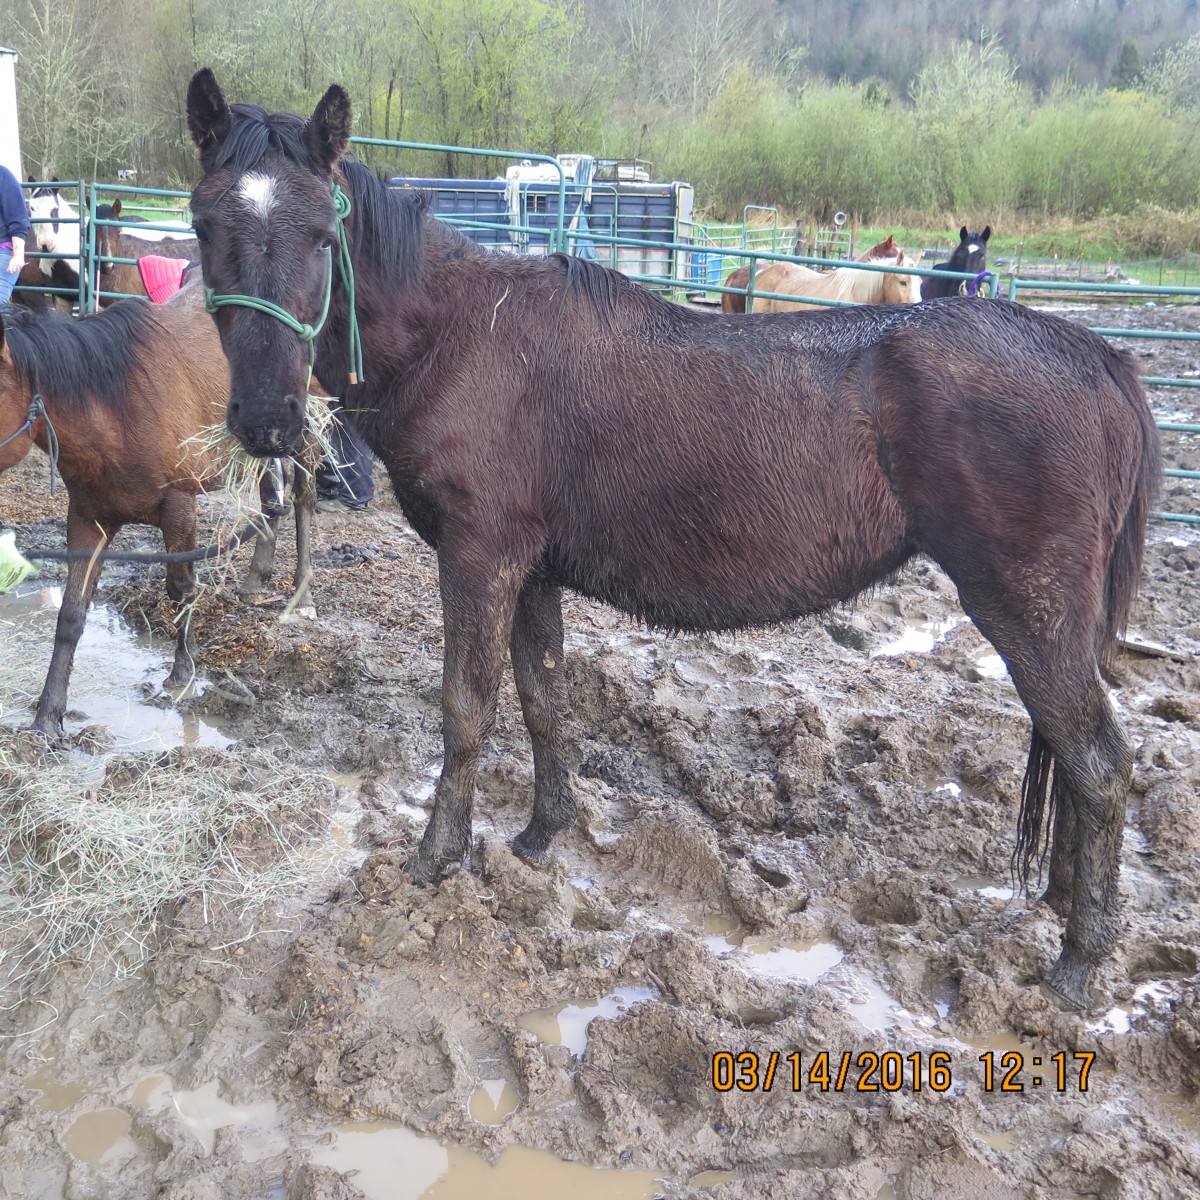 Neglected Horses Seized in Clatskanie